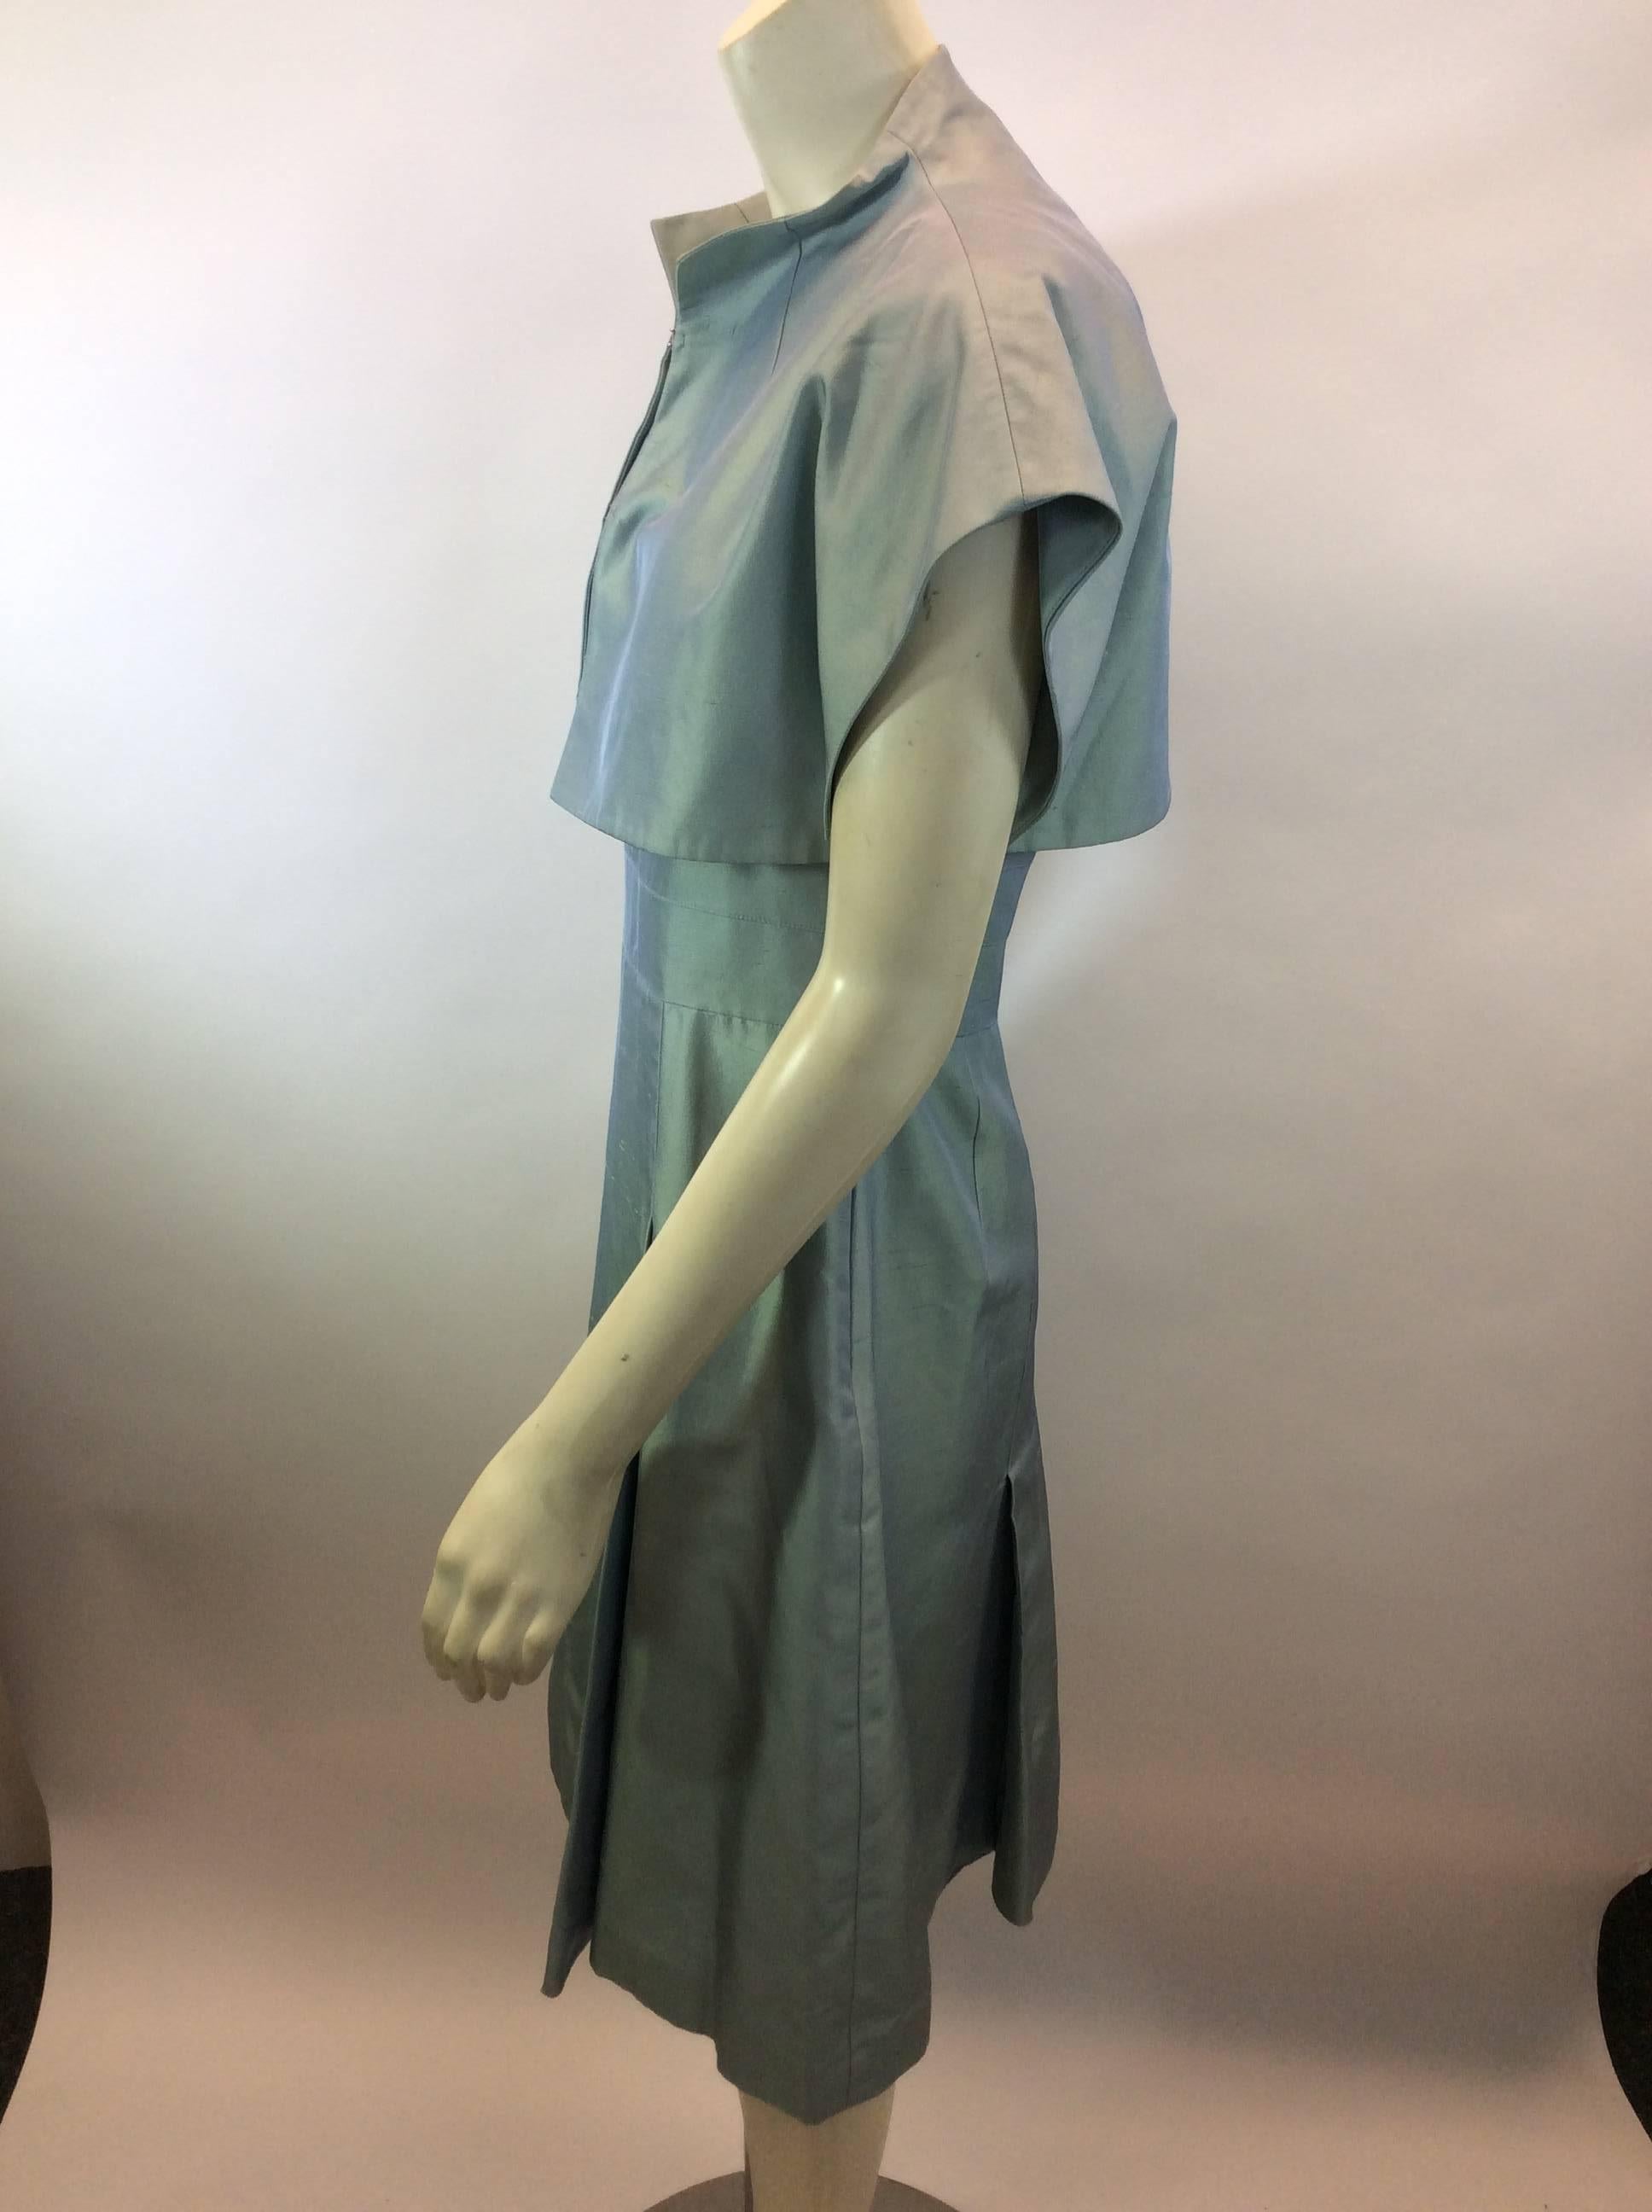 Akris Blue Silk Two Piece Dress
100% Silk
$559
Size 8
Length 38